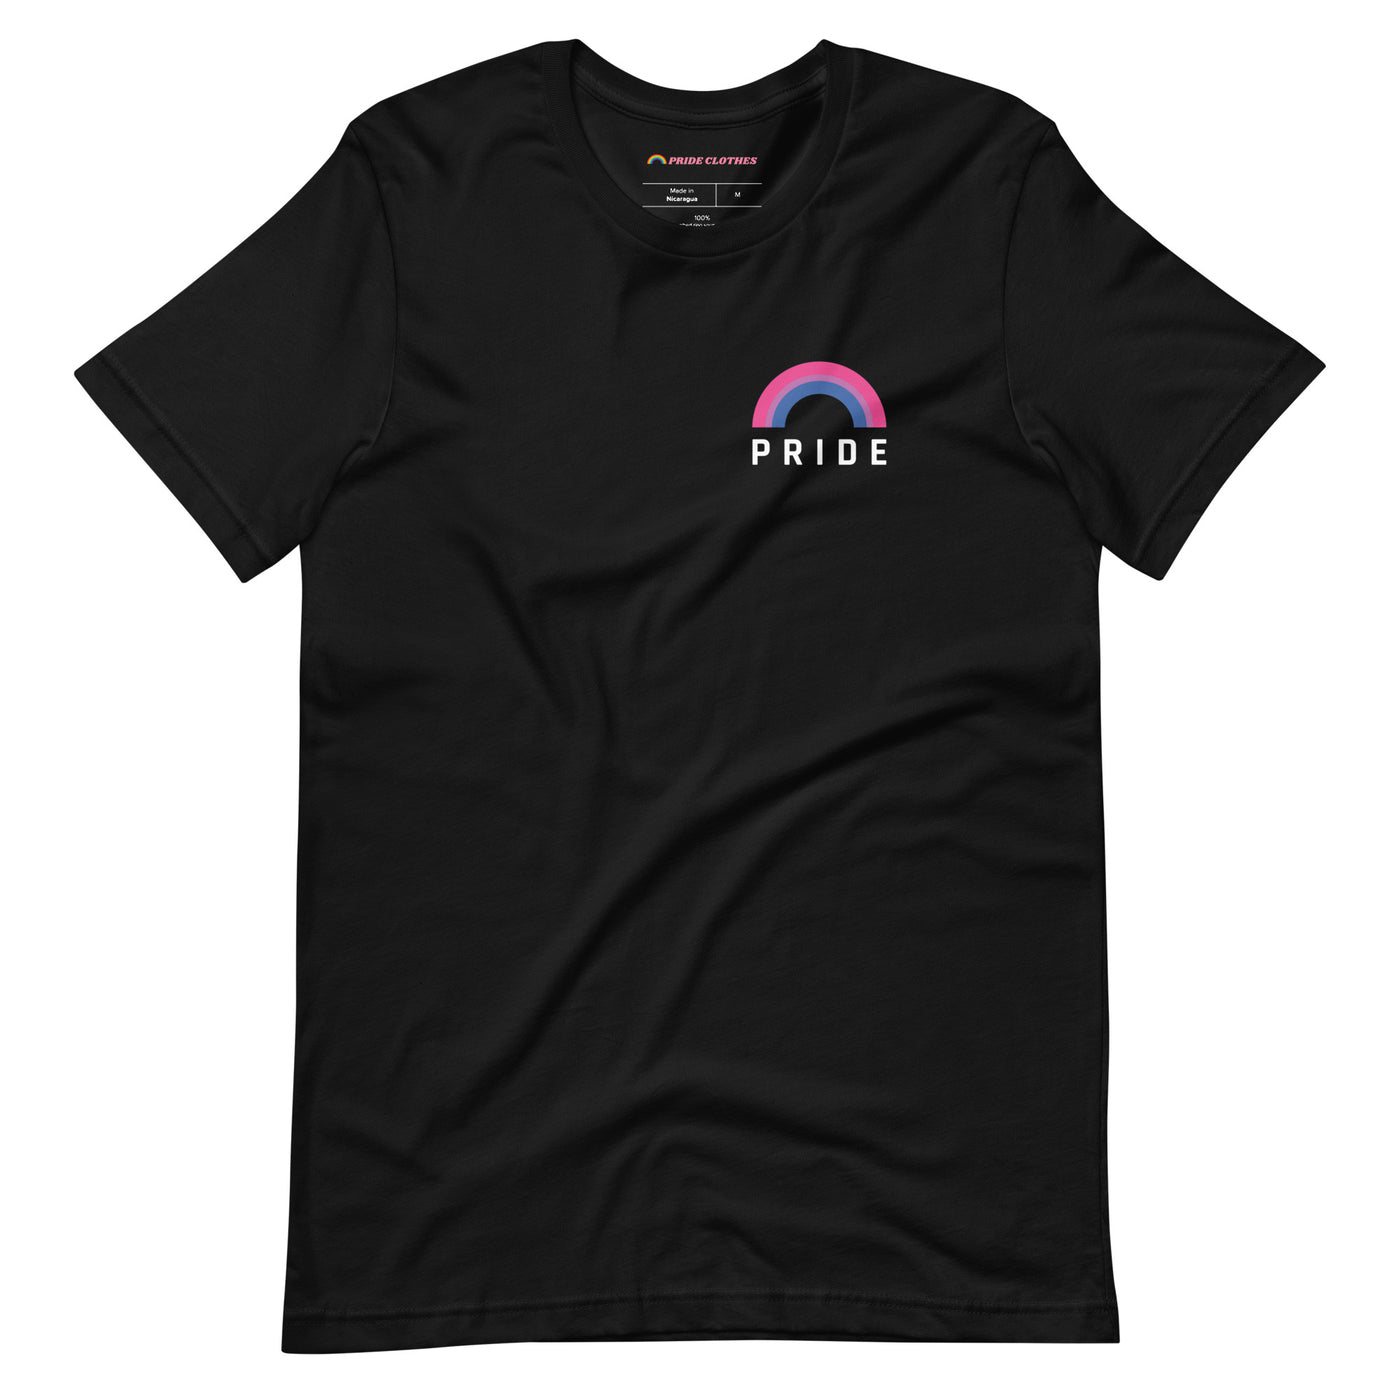 Pride Clothes - I Love Both Bisexual Pride Rainbow TShirt - Black